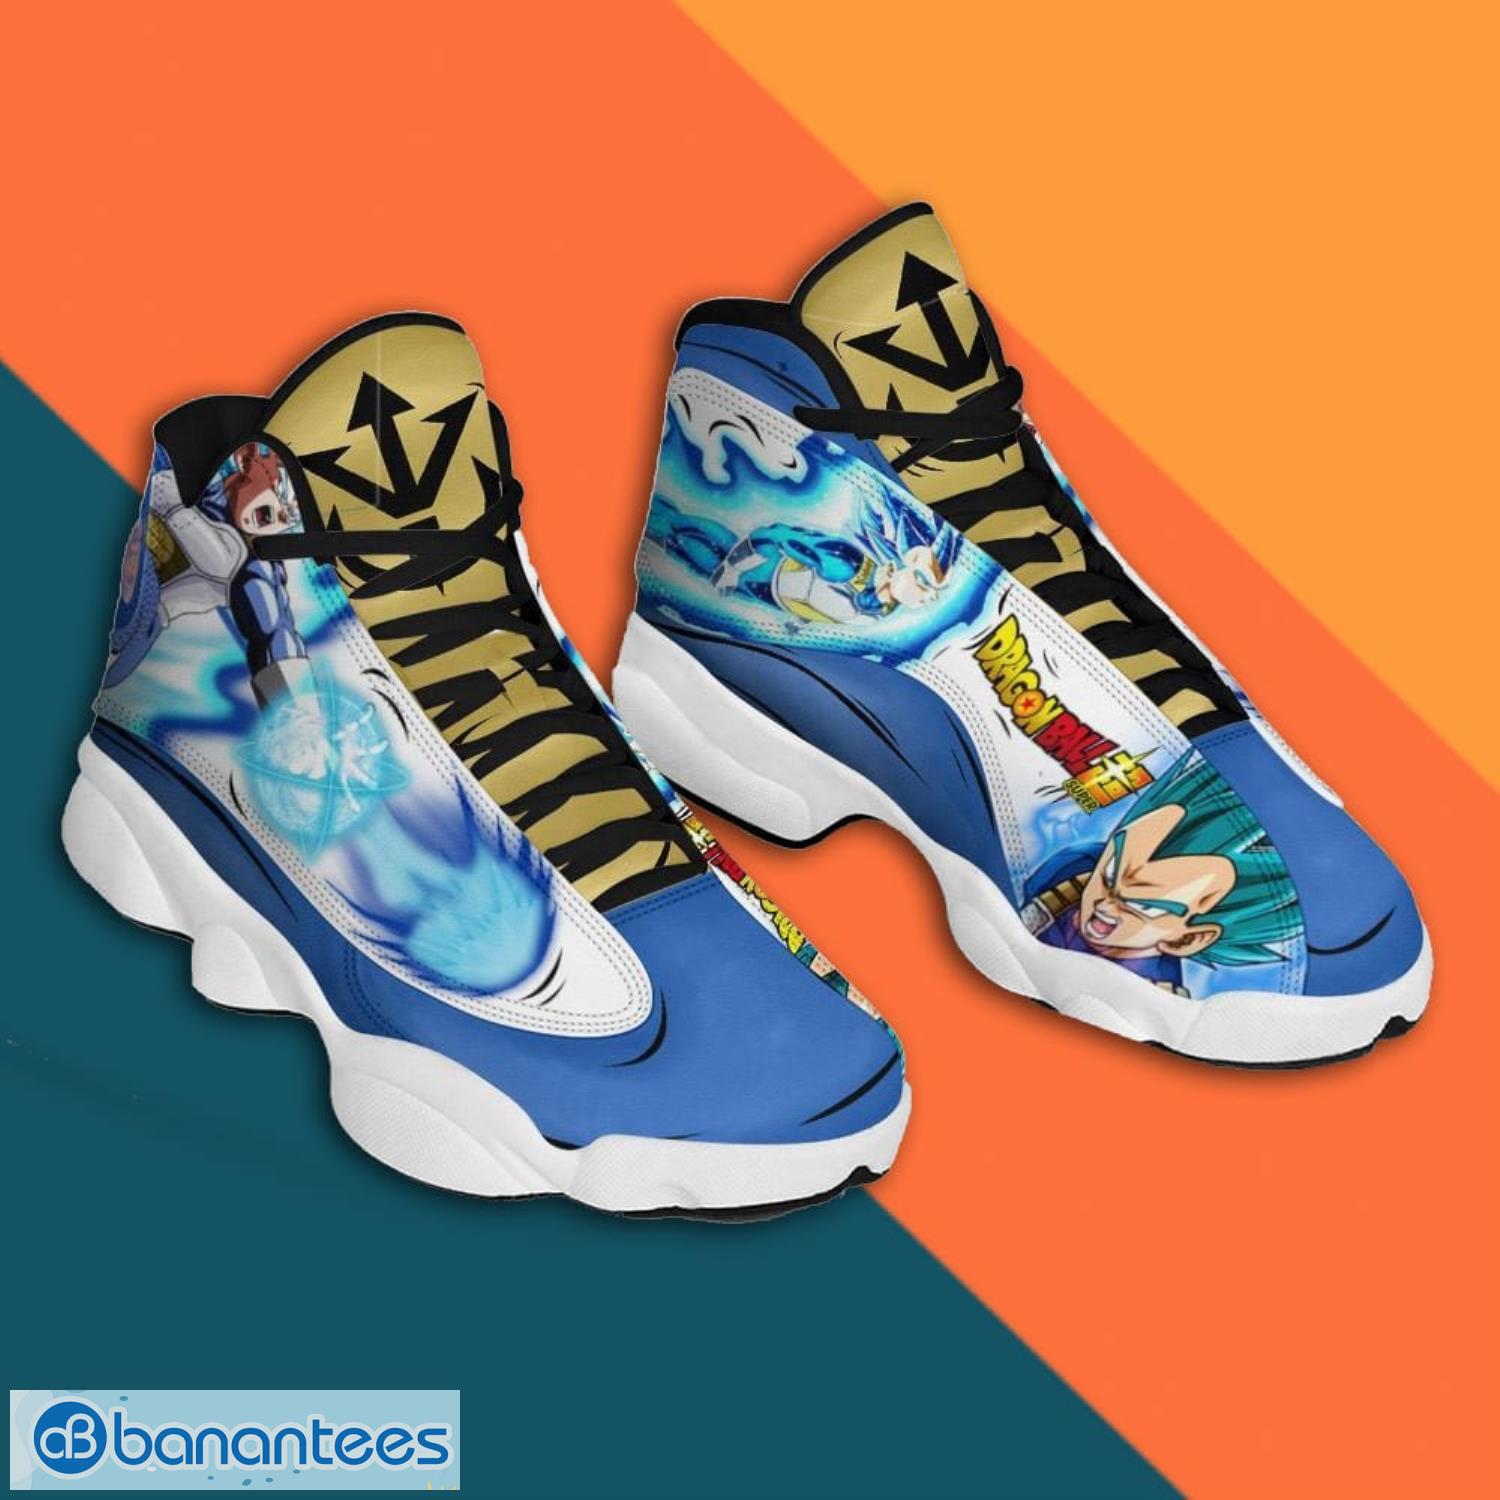 Dragon Ball Vegeta Custom Air Jordan 13 Shoes Limited Edition